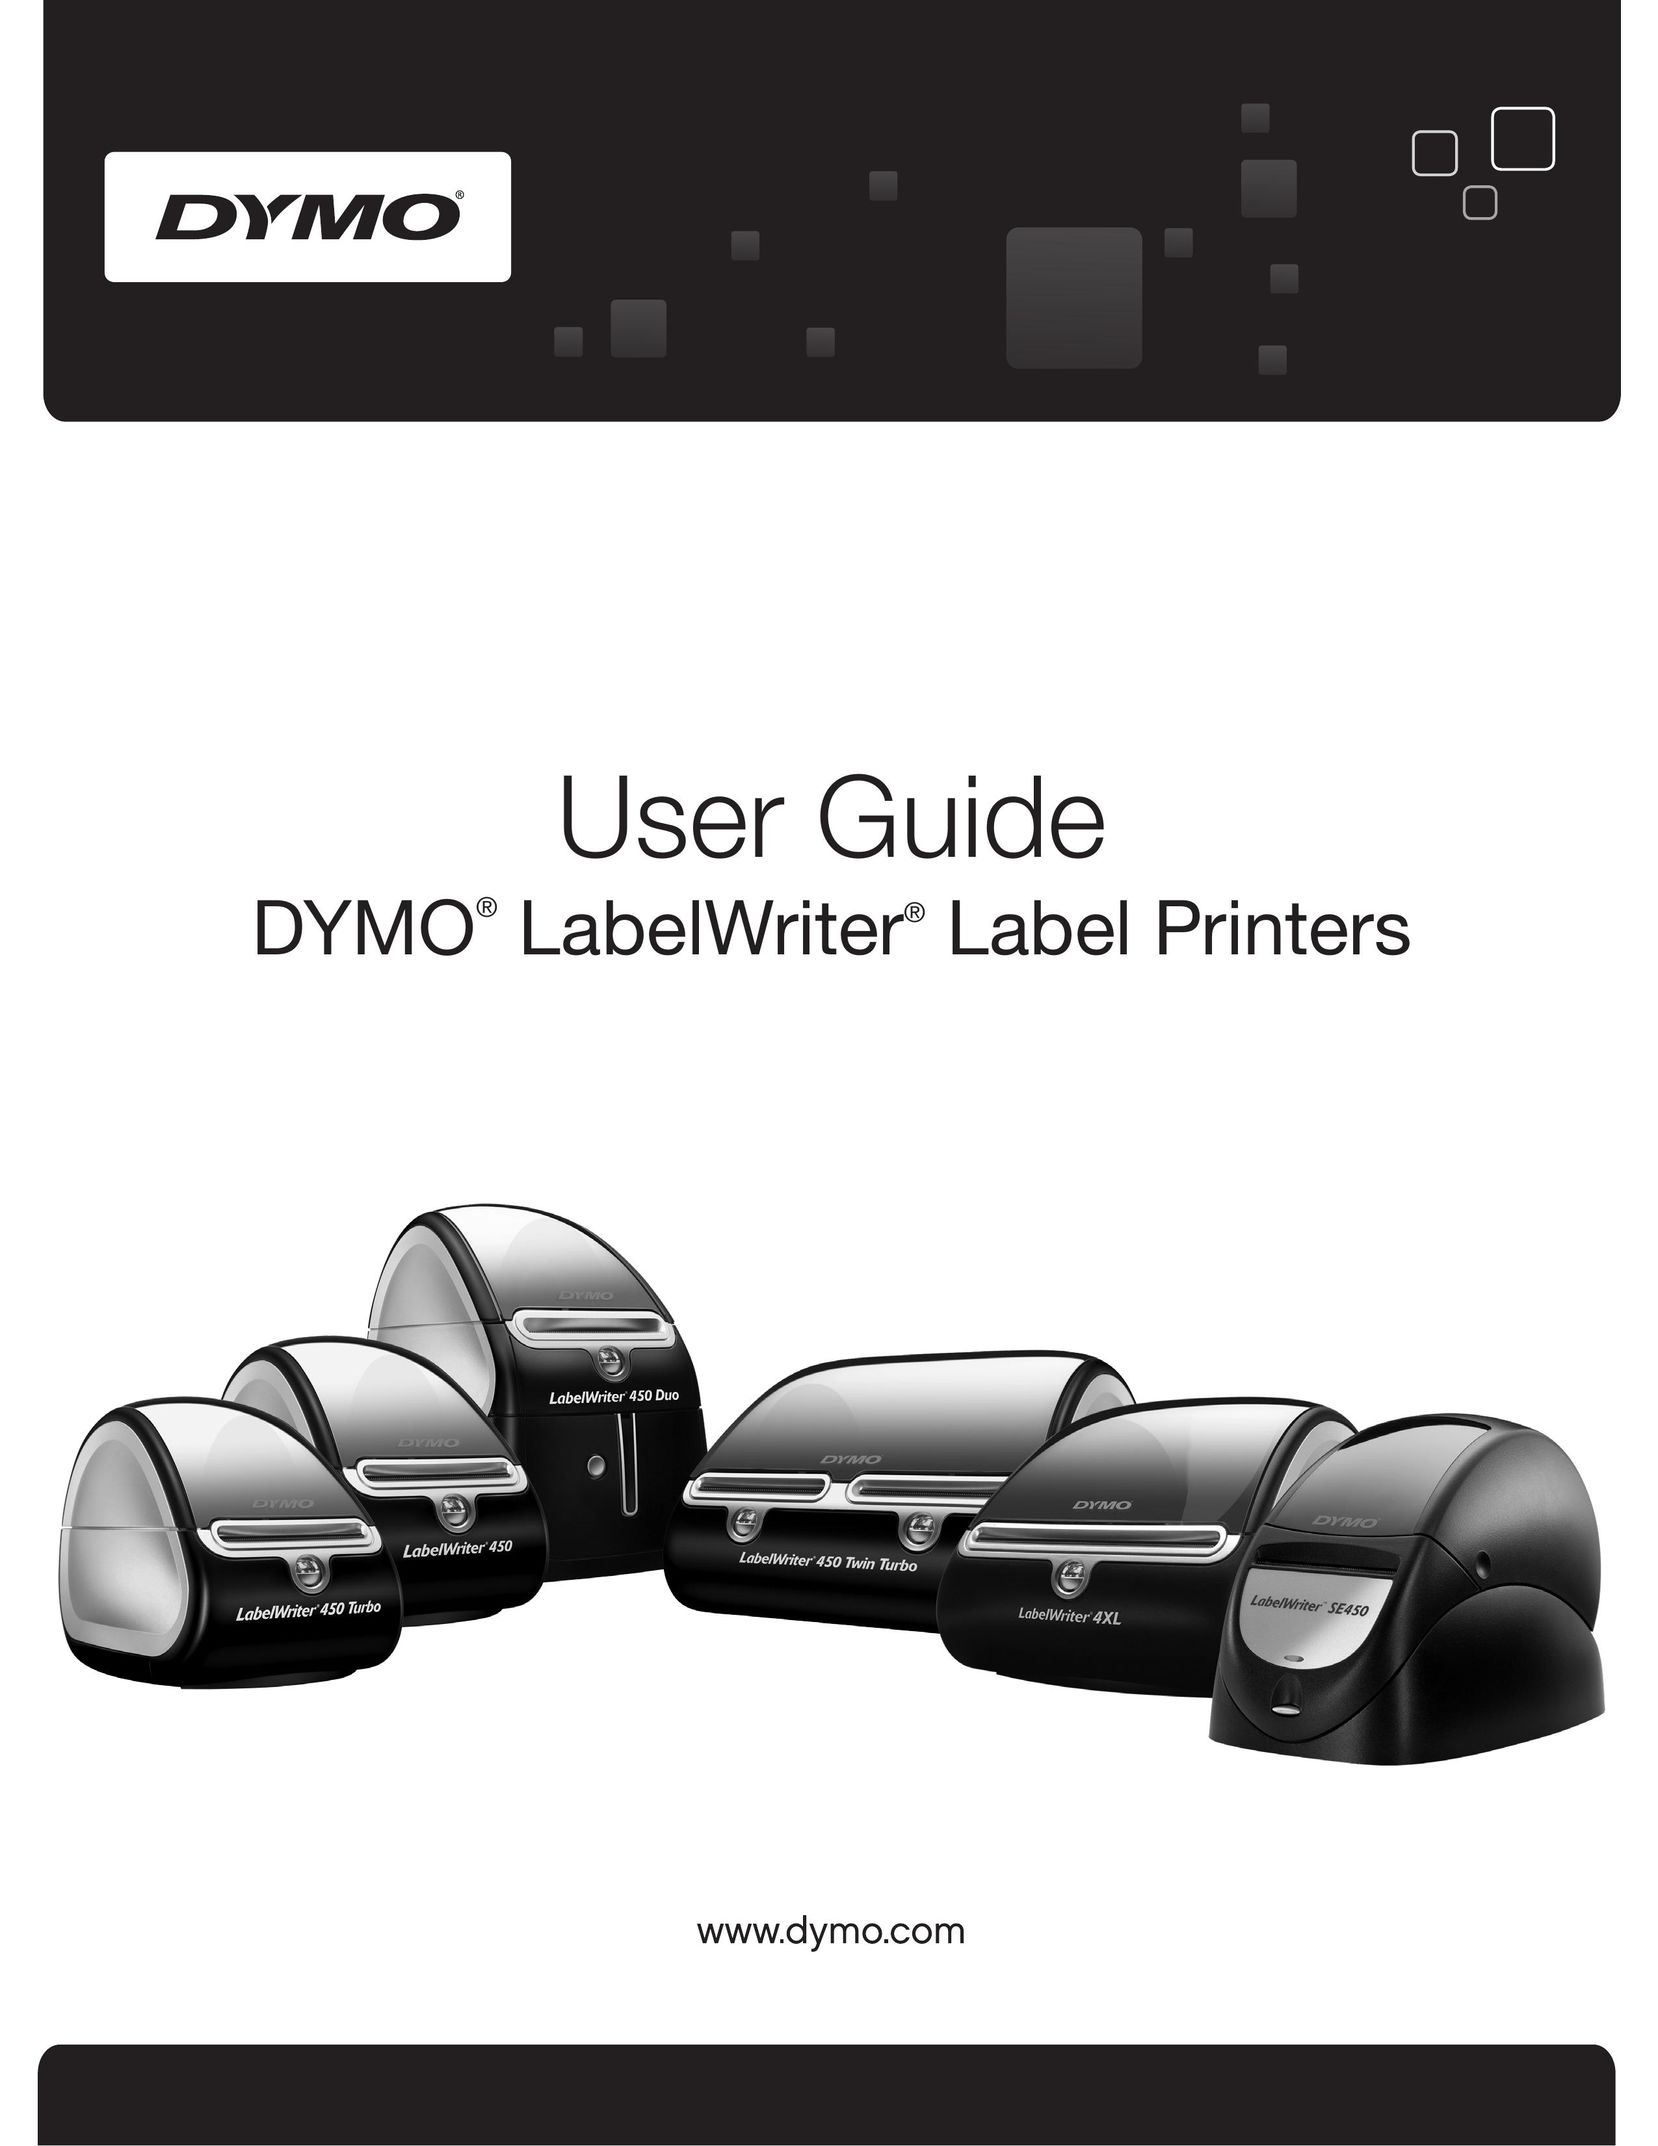 Dymo 450 Label Maker User Manual